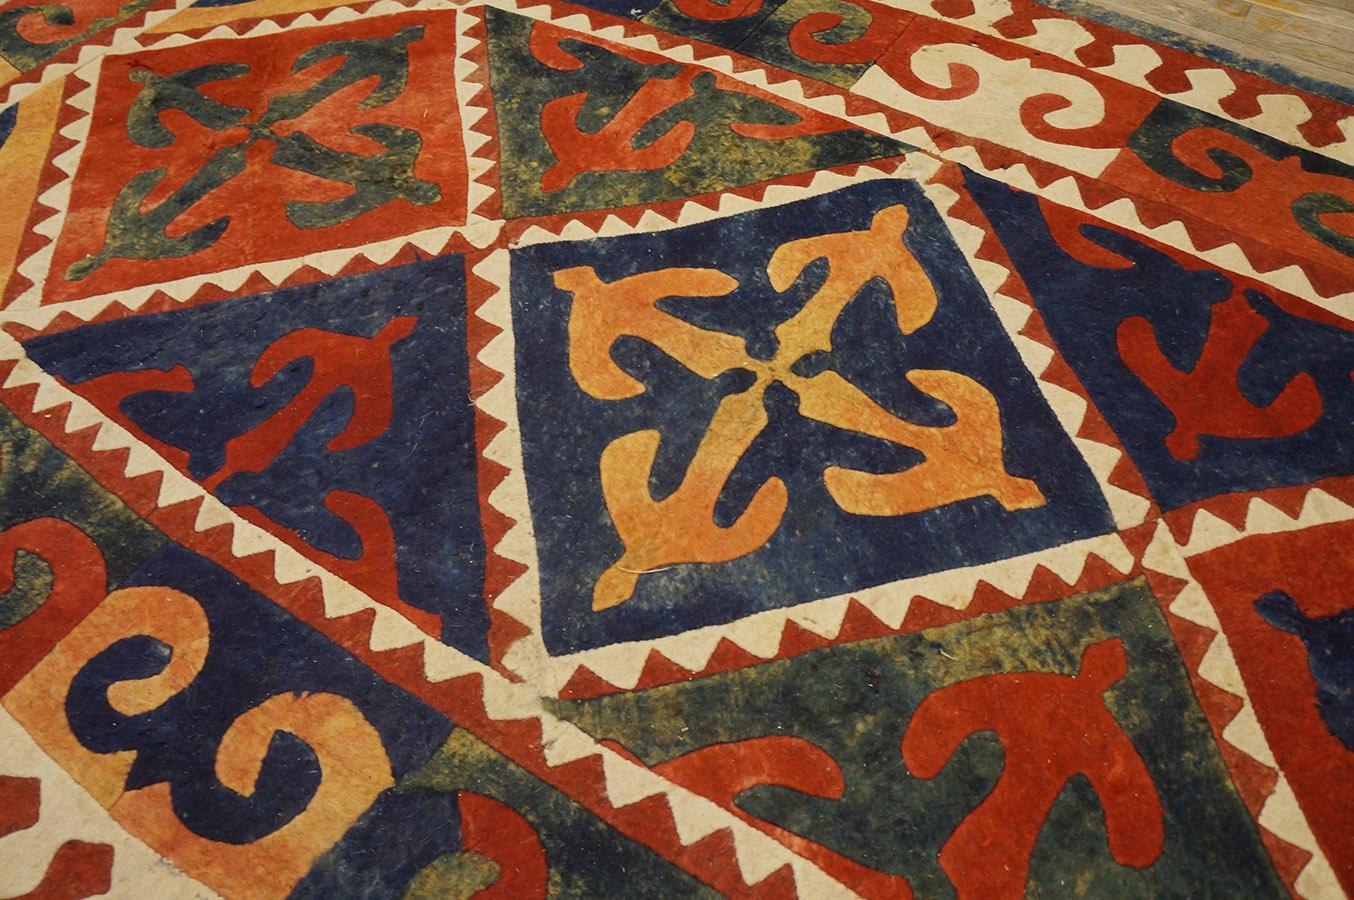 Late 19th Century Kirghiz Felt Shyrdak Carpet ( 6' x 12' - 188 x 365 ) For Sale 3